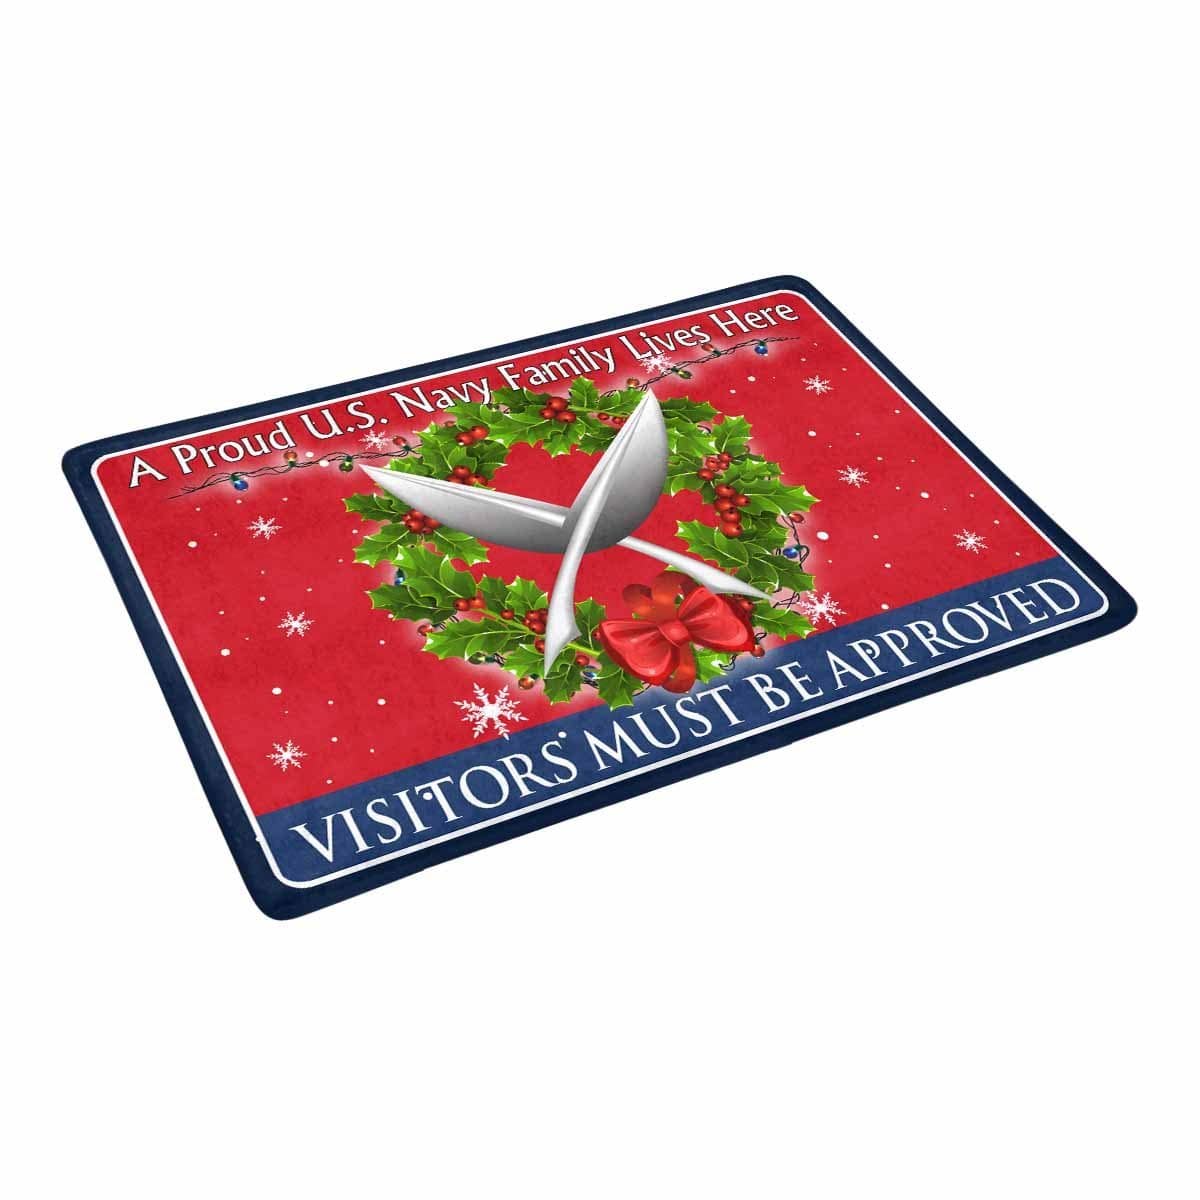 U.S Navy Yeoman Navy YN - Visitors must be approved - Christmas Doormat-Doormat-Navy-Rate-Veterans Nation